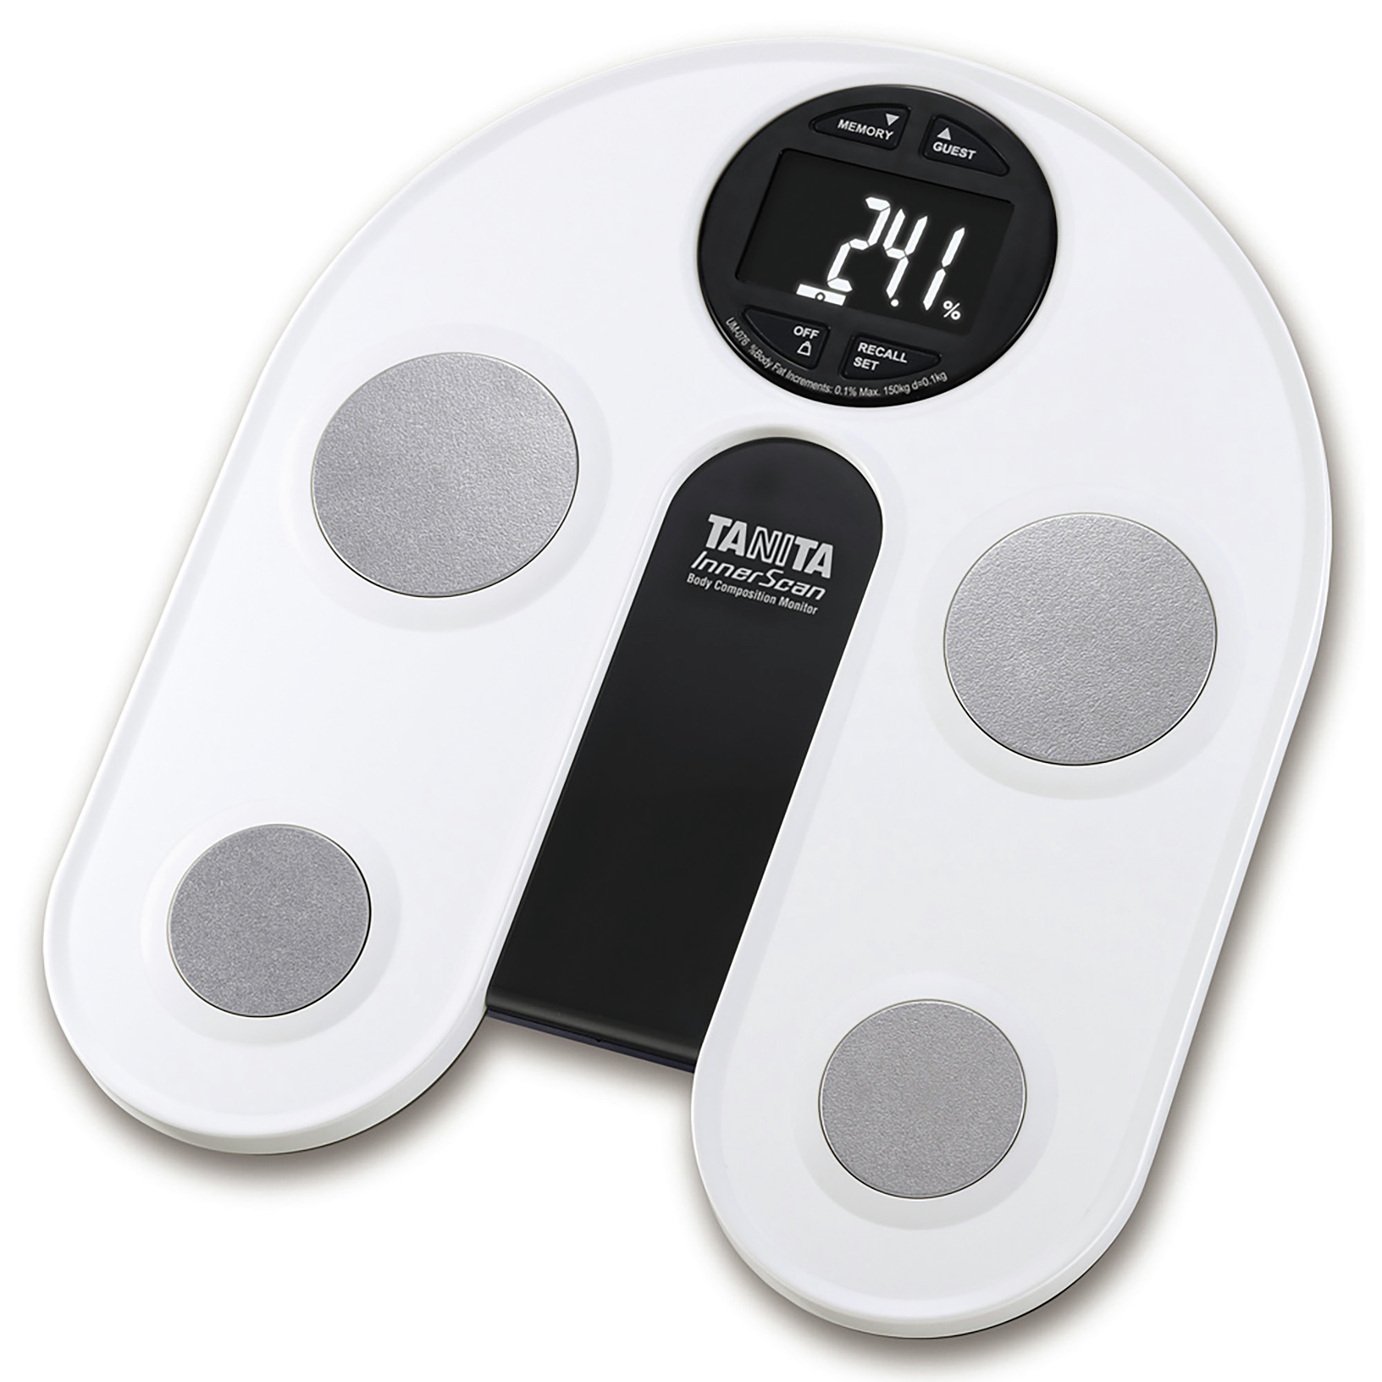 Tanita UM076 Body Analyser Bathroom Scales - White